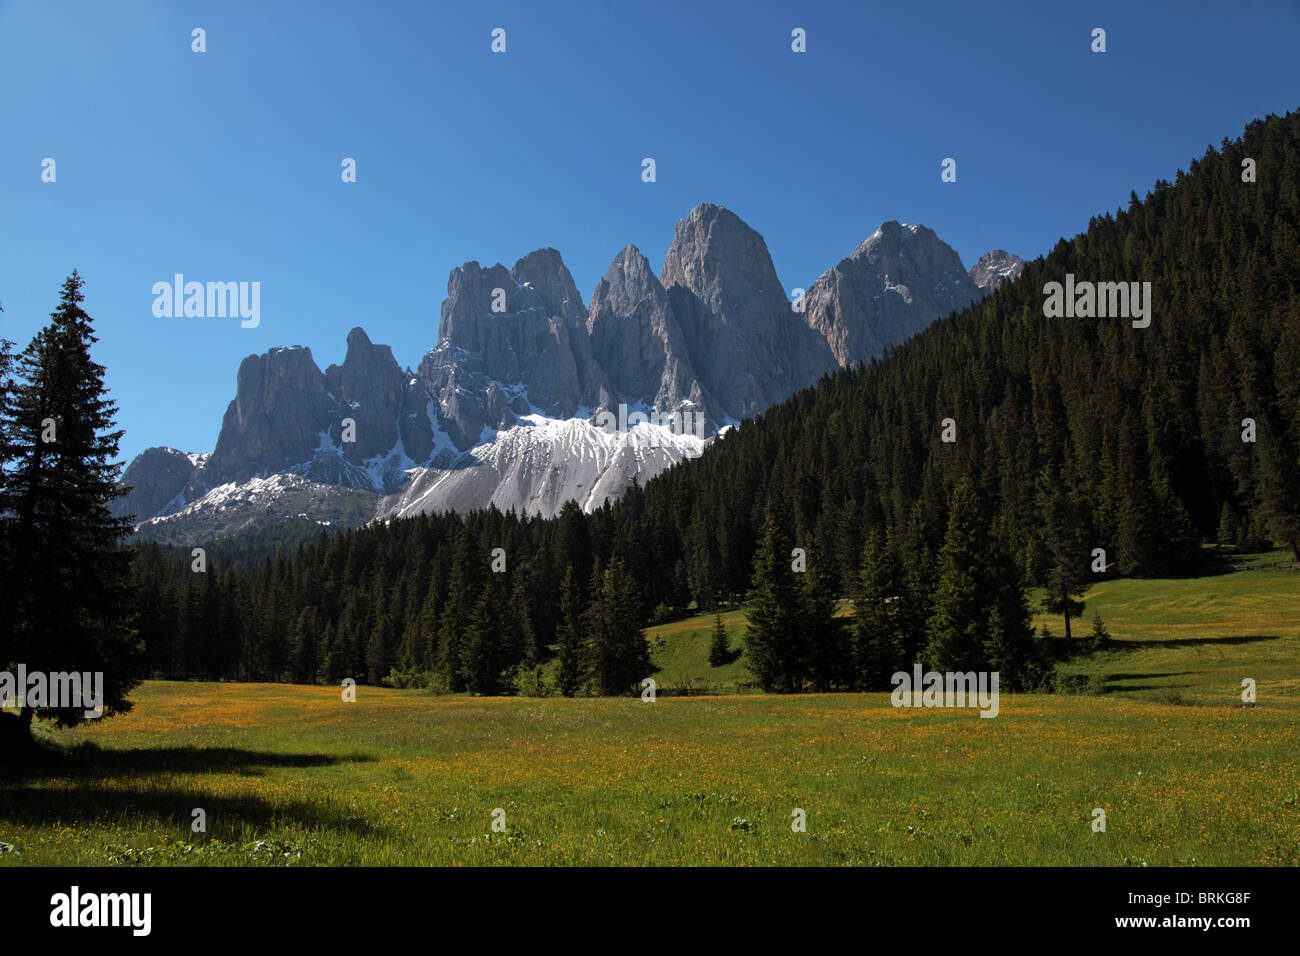 Geisler Group of the Dolomites, South Tirol, Italy Stock Photo